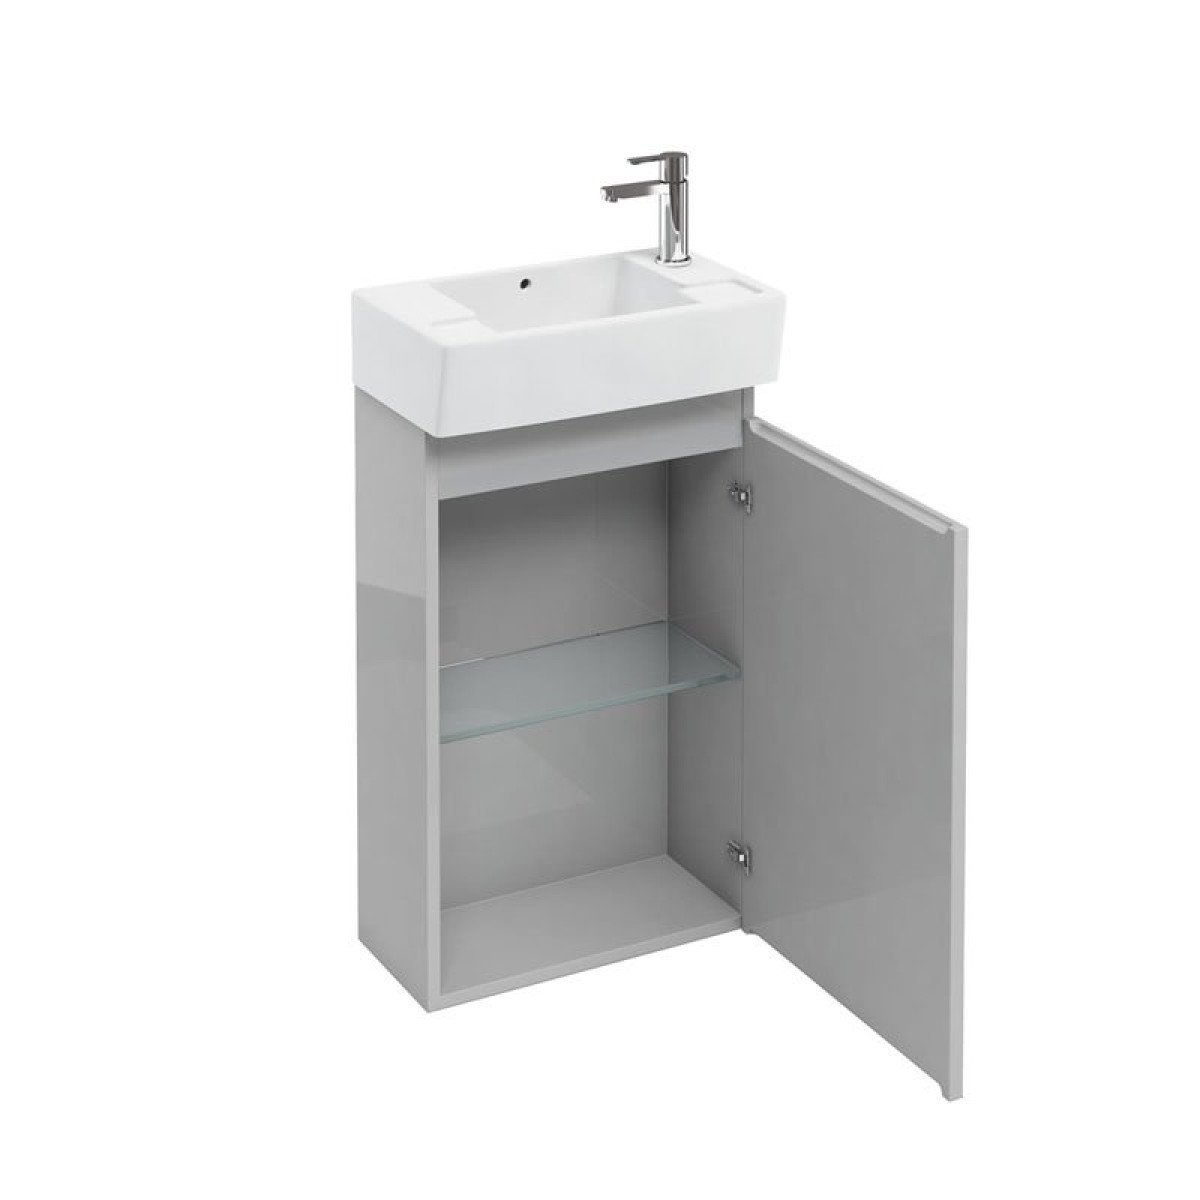 Britton Compact Floor Standing Lh Light Grey Cloakroom Vanity Unit 505 X 305mm Basin - Pale Grey Bathroom Vanity Unit